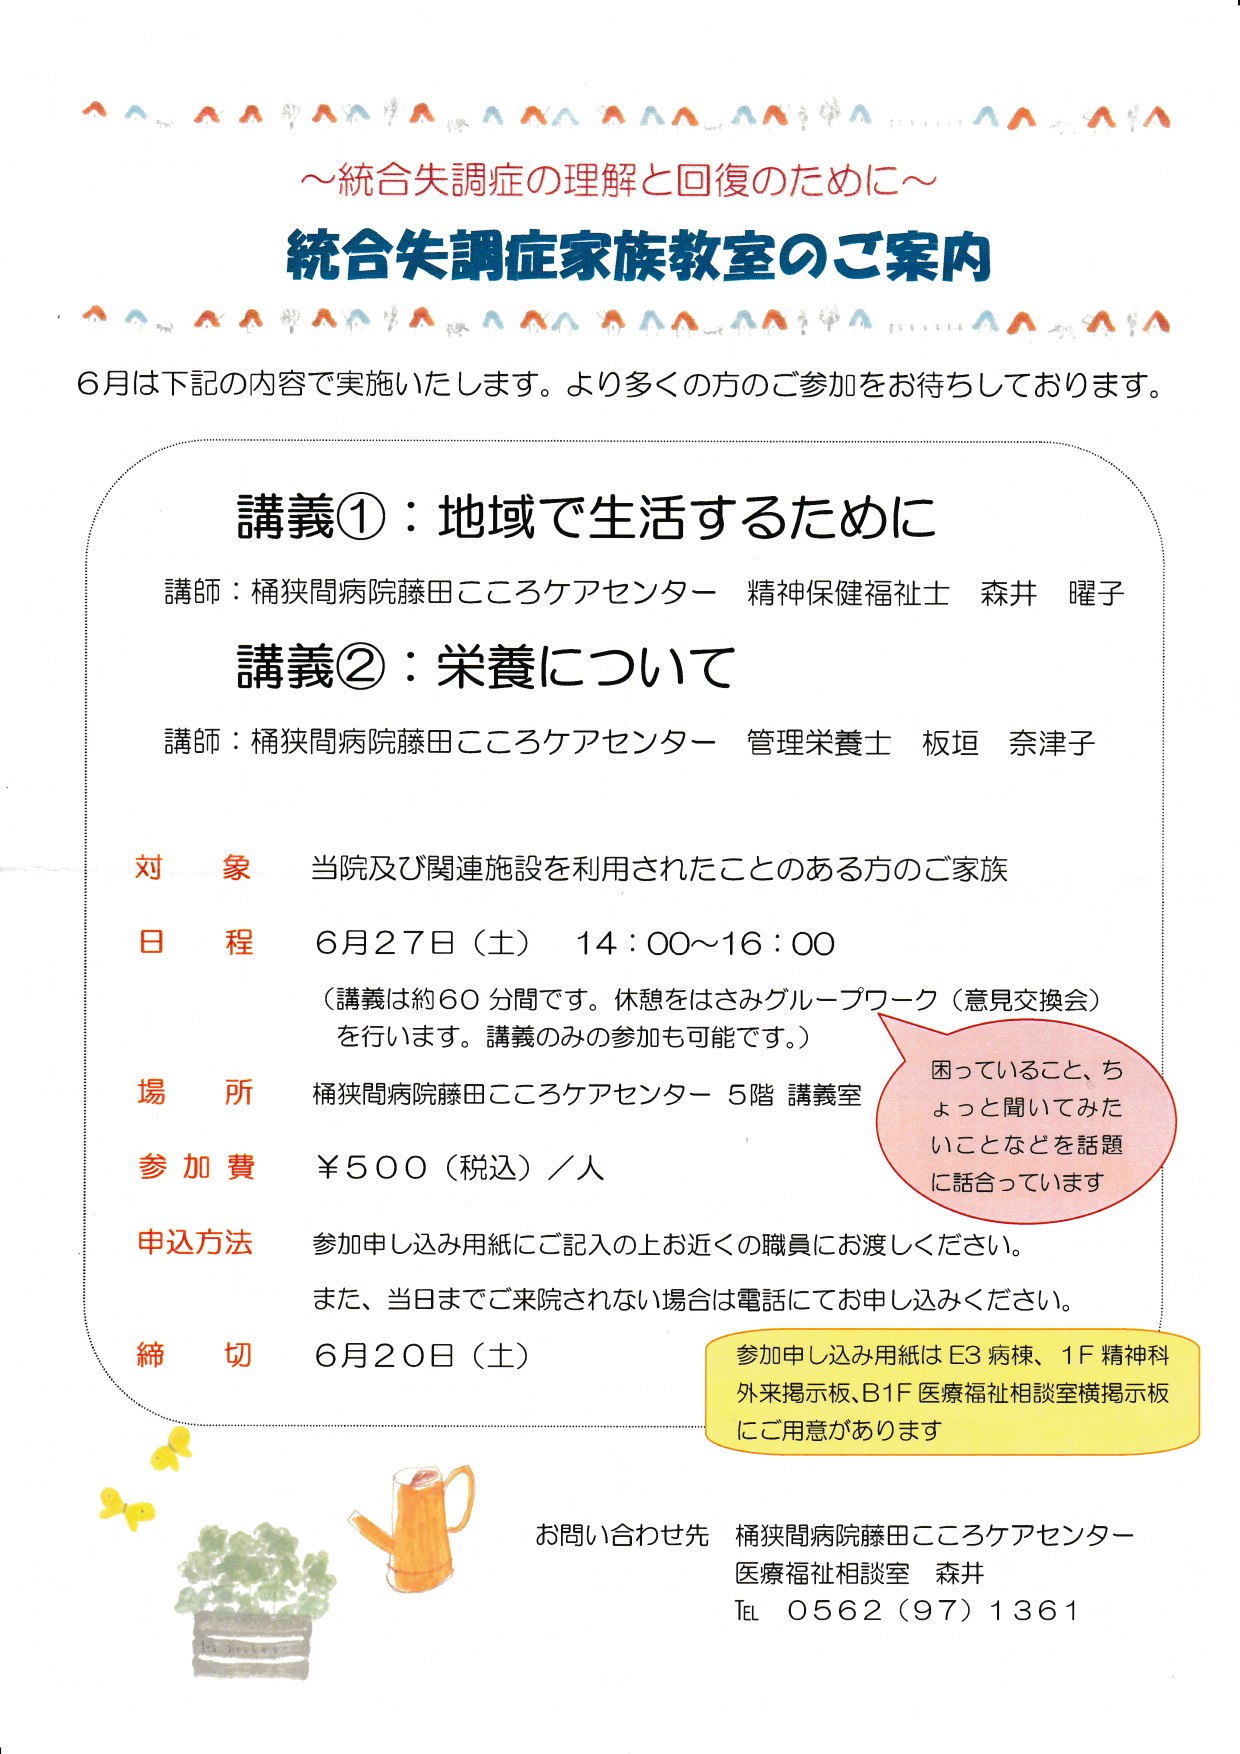 http://www.seishinkai-kokoro.jp/news/SCN_0004.jpg